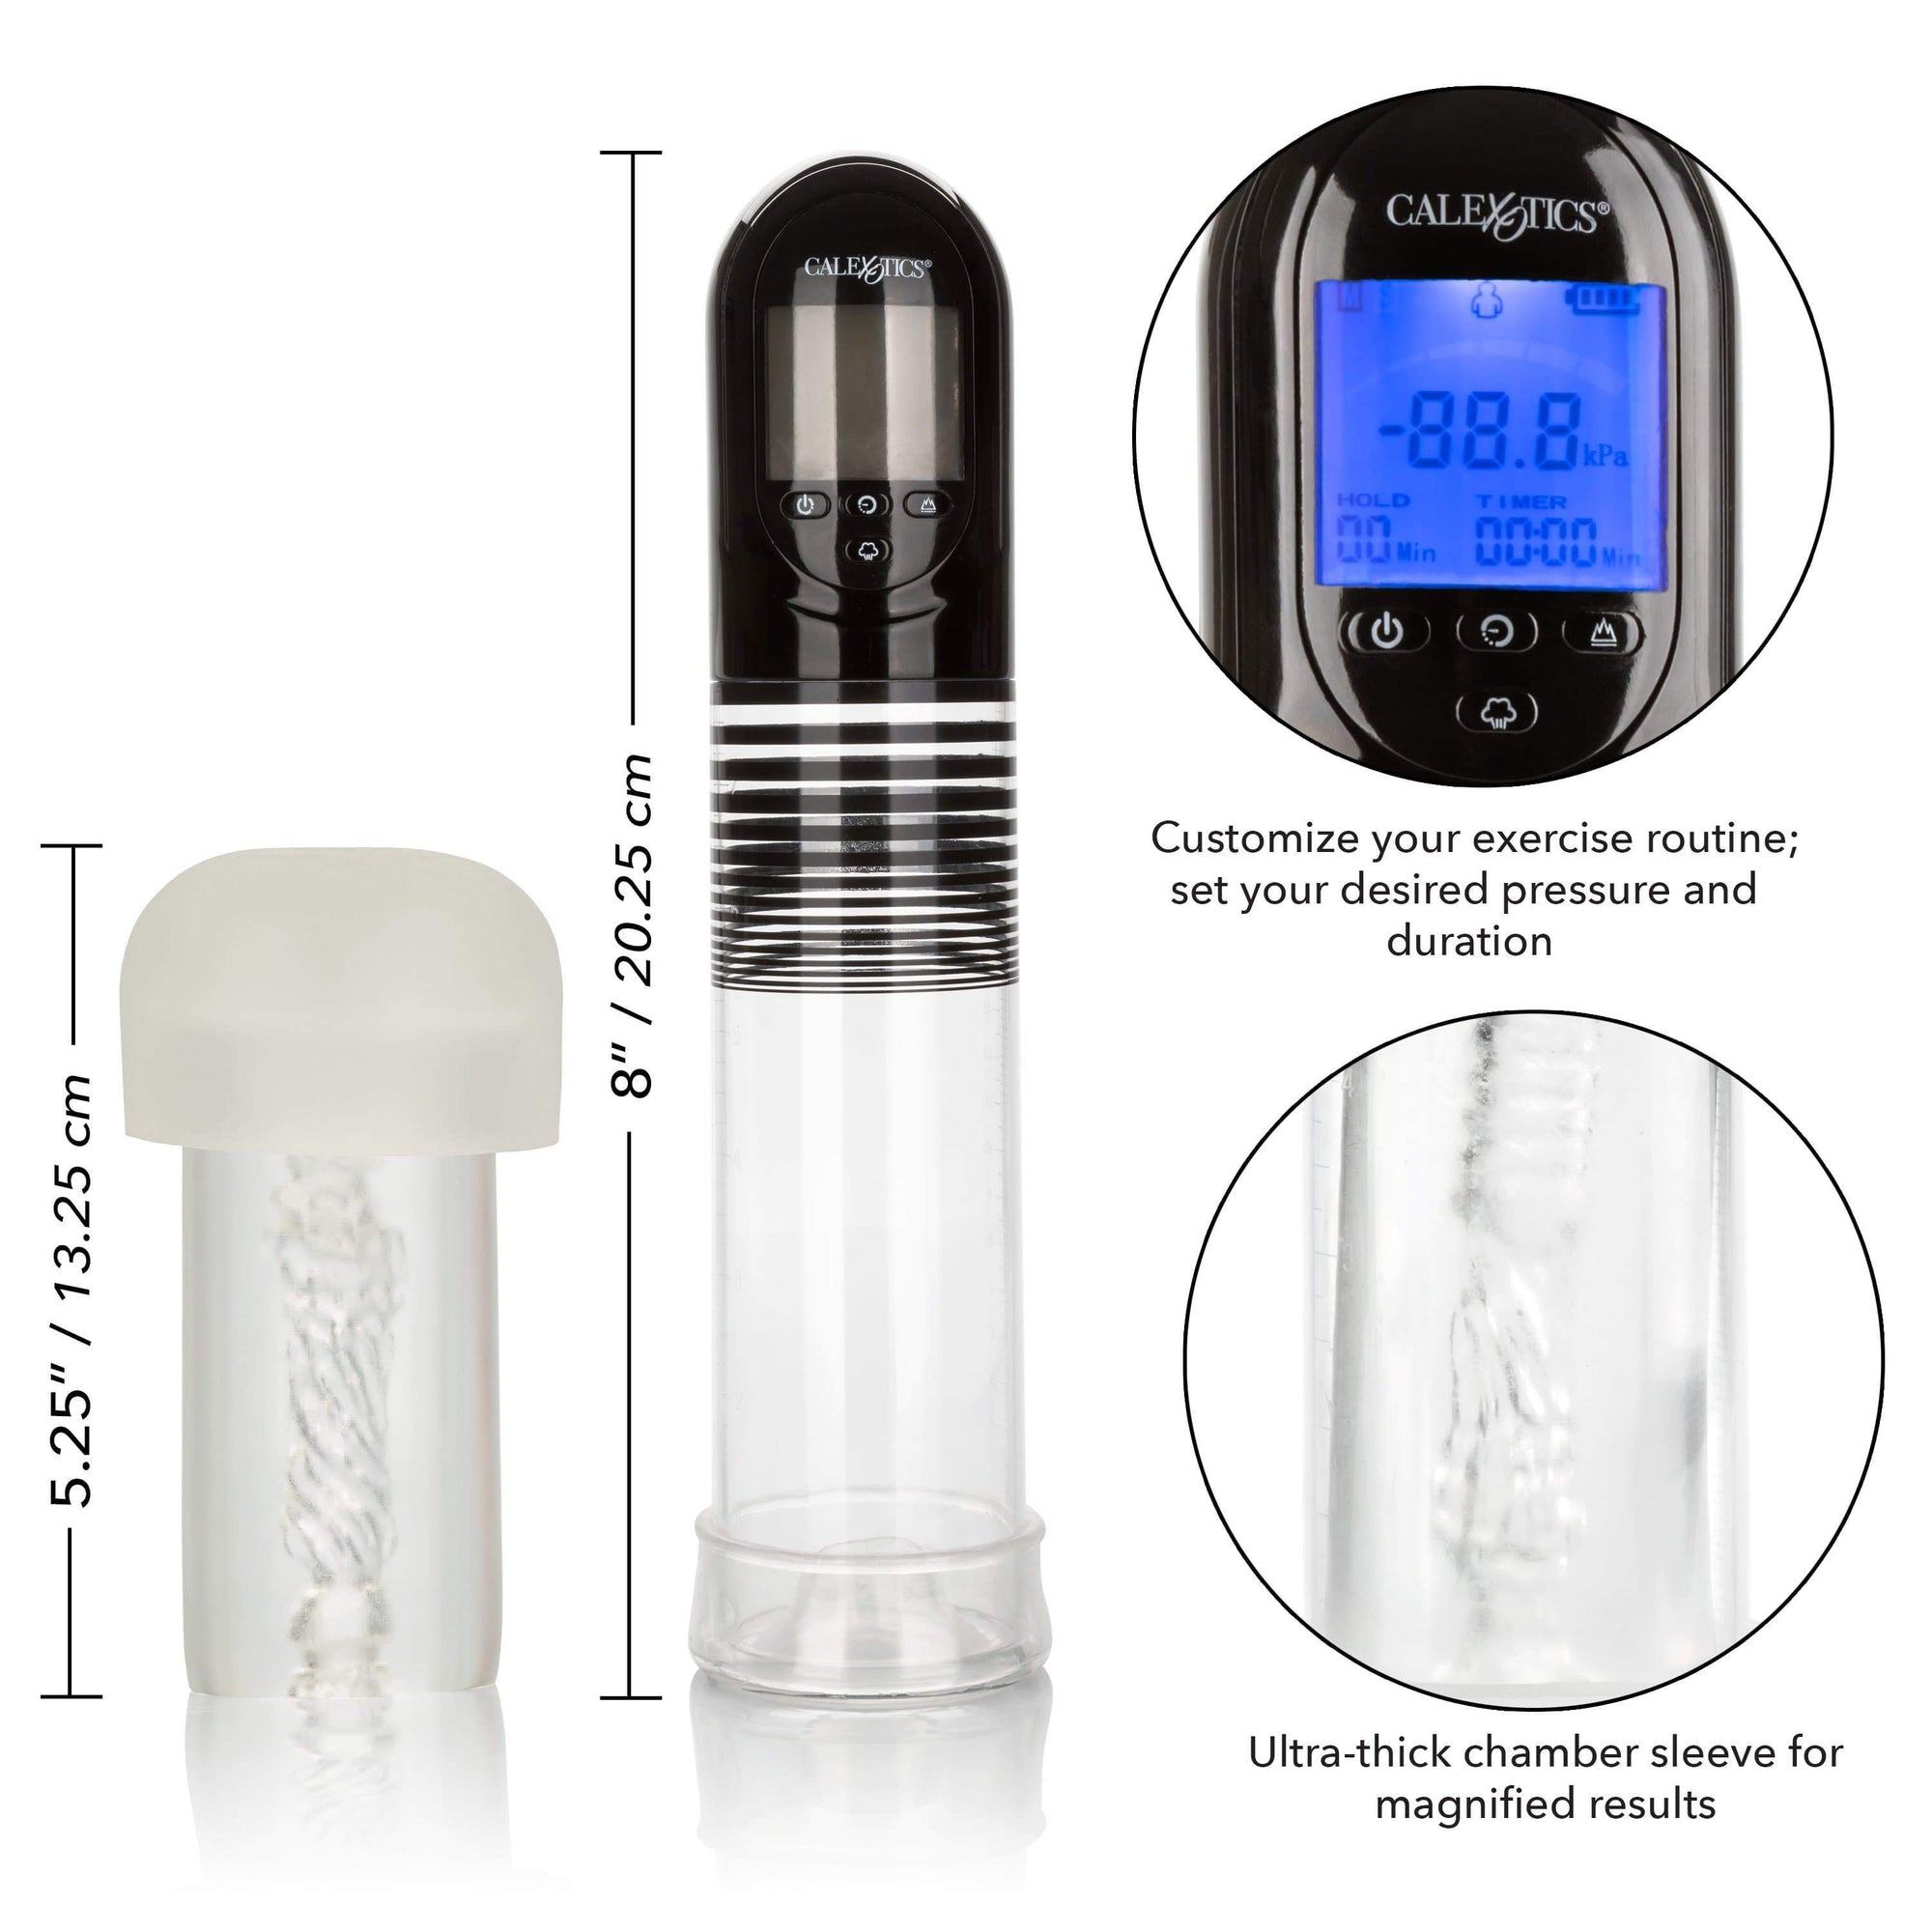 California Exotics - Optimum Series Advanced Automatic Smart Penis Pump (Clear) -  Penis Pump (Vibration) Rechargeable  Durio.sg